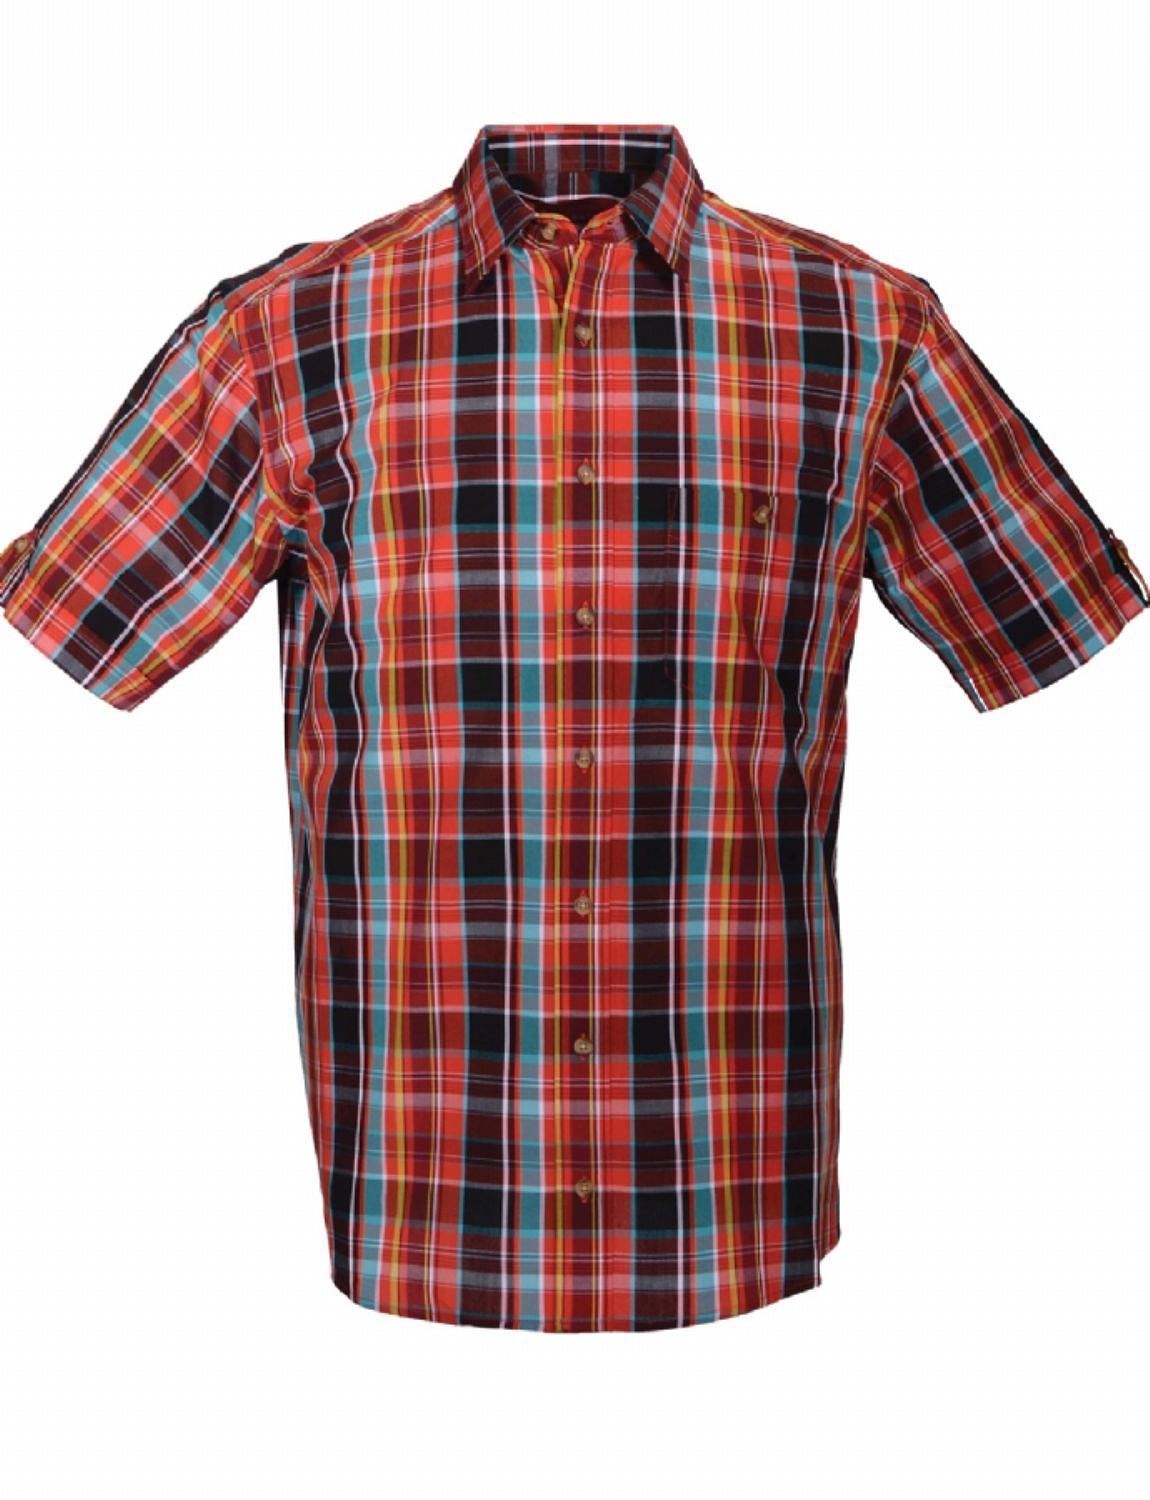 Double Two Vibrant Short Sleeve Check Shirt - Menswear Shirts & Tops ...